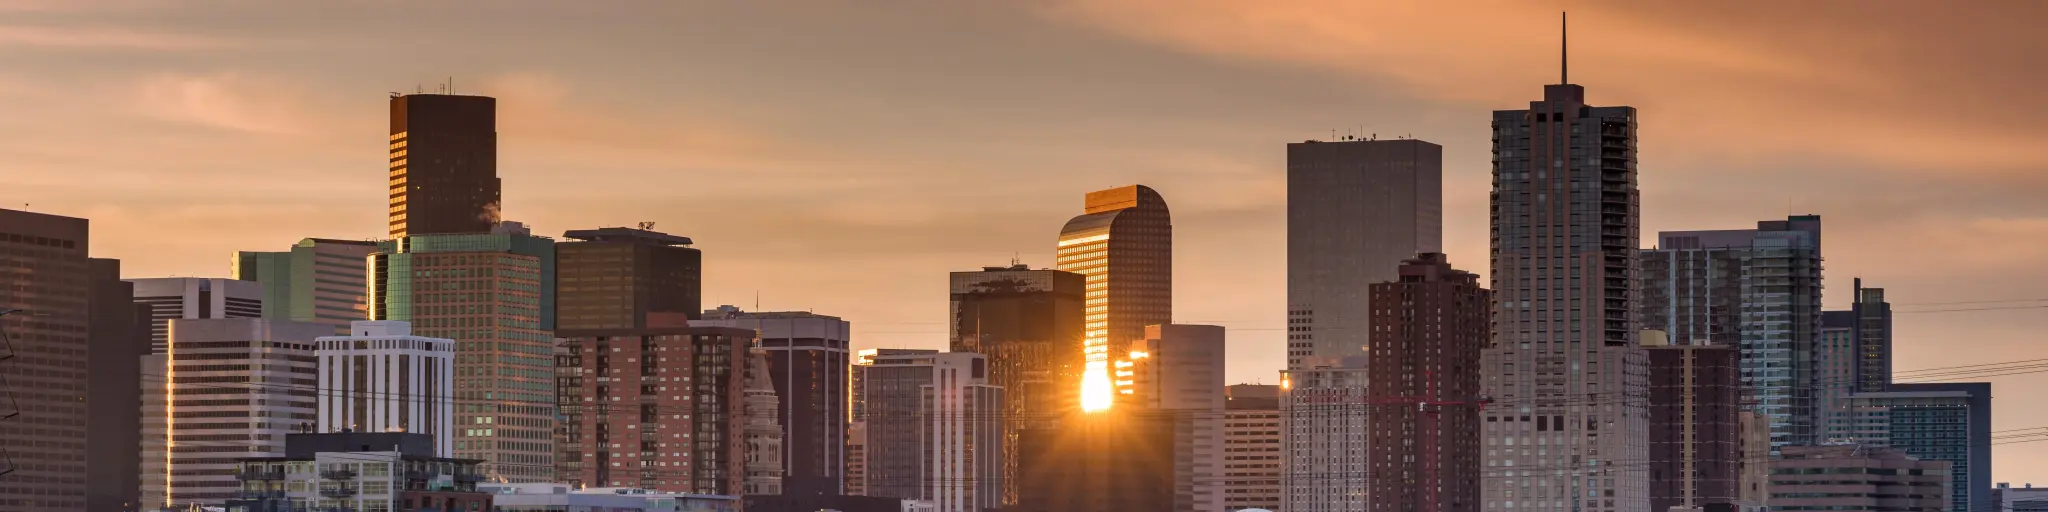 Denver skyline, sun setting behind the skyscrapers